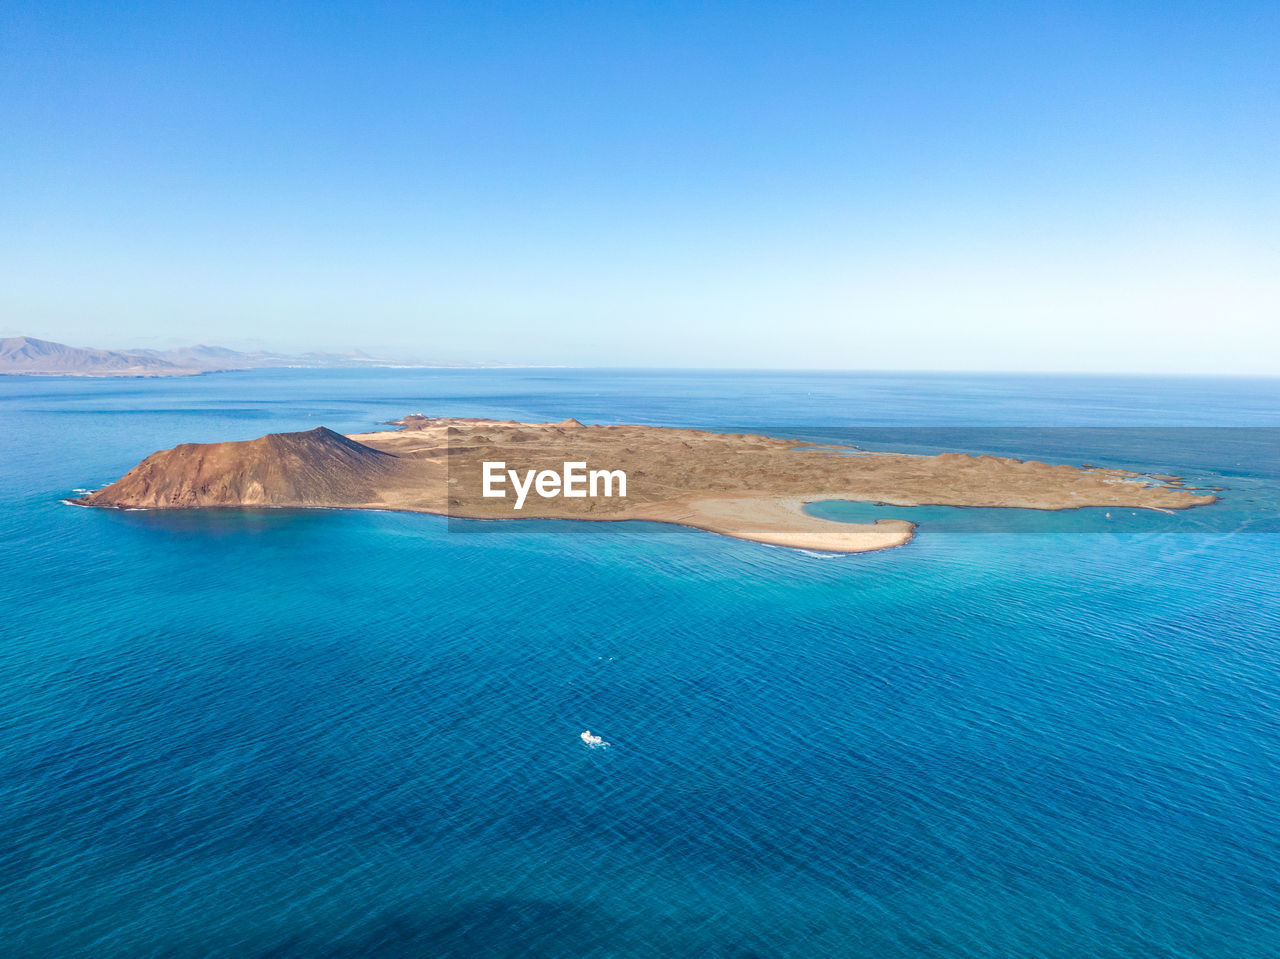 Drone view of isla de lobos, a small island off the coast of fuerteventura, canary islands, spain.